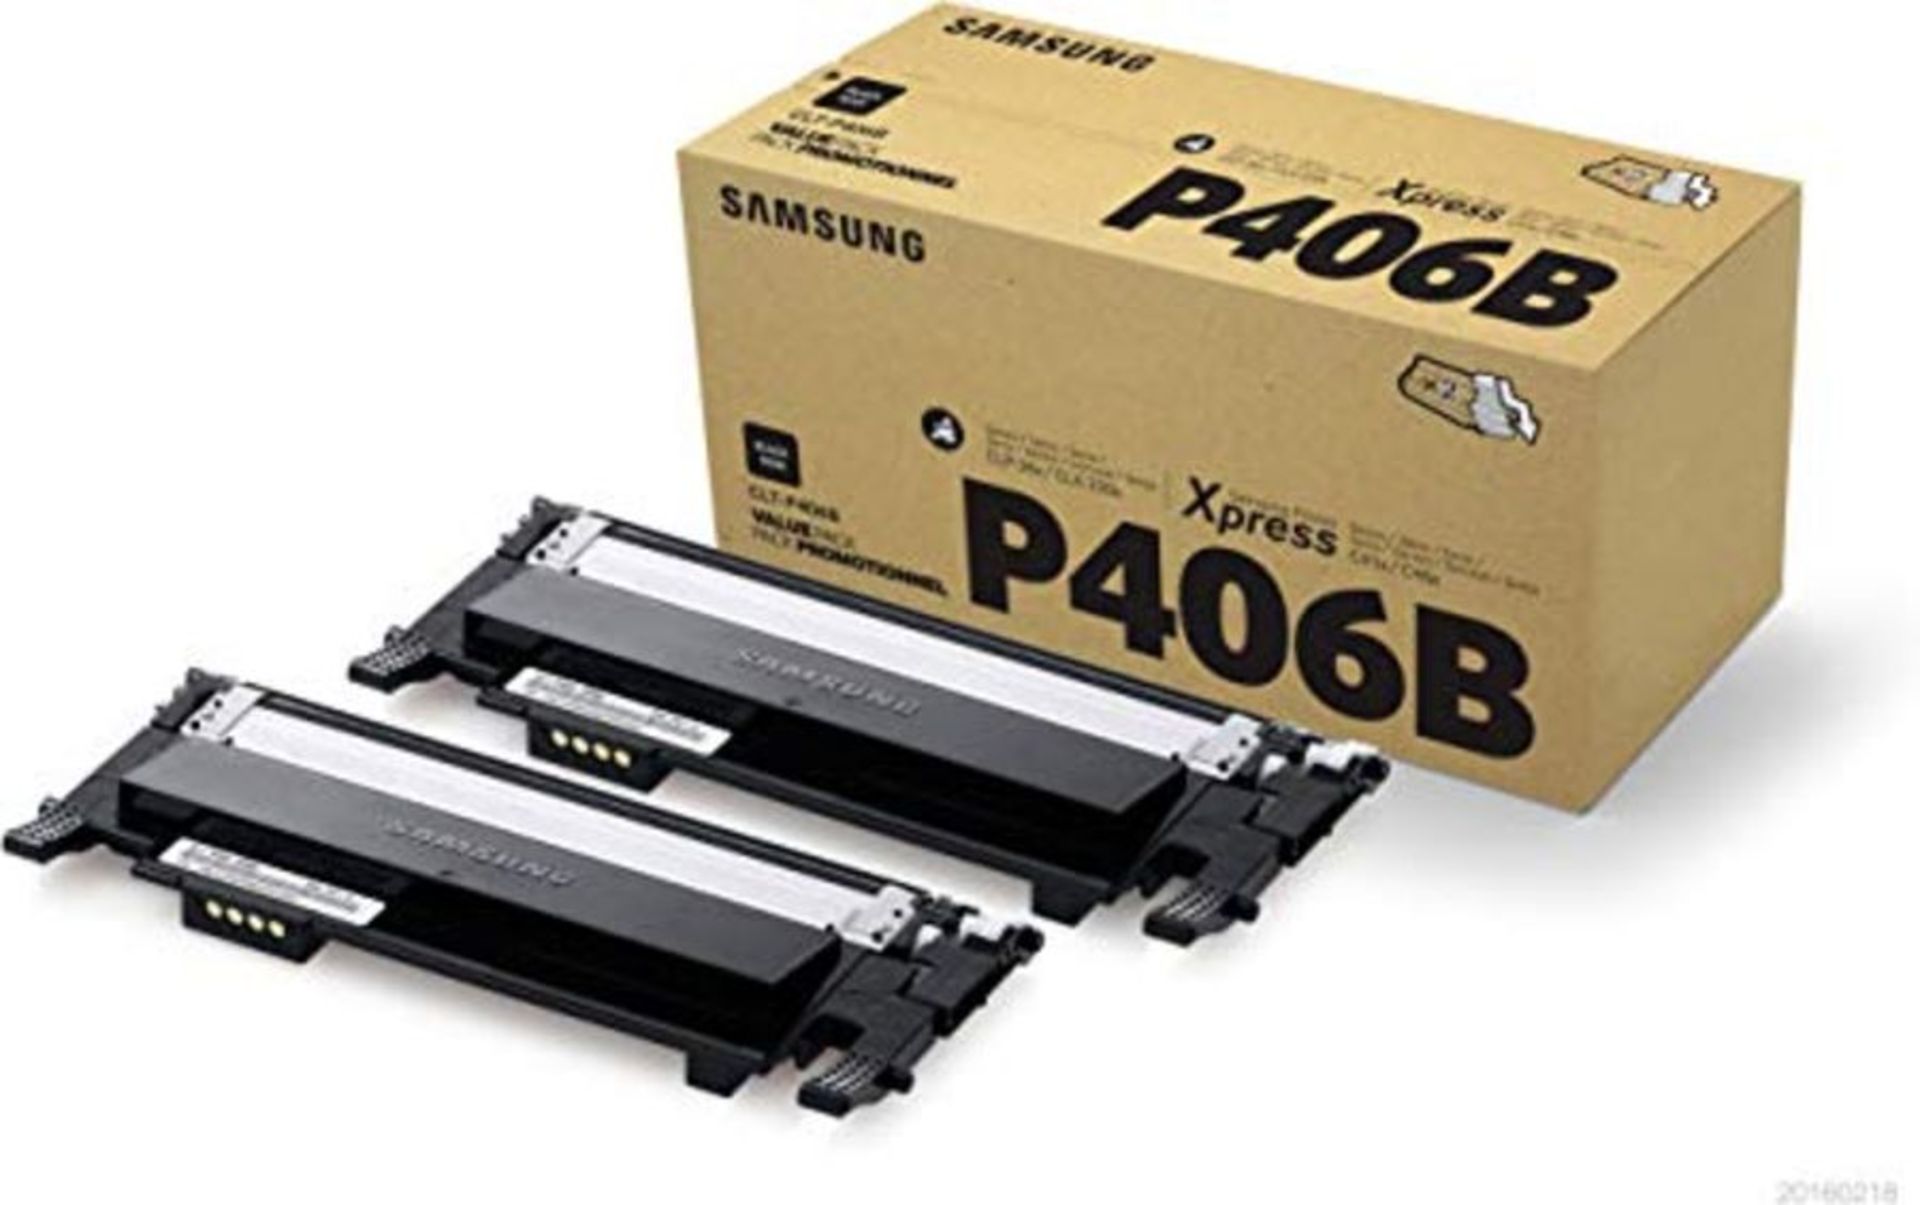 RRP £81.00 Samsung SU374A CLT-P406B Toner Cartridges, Black, Pack of 2